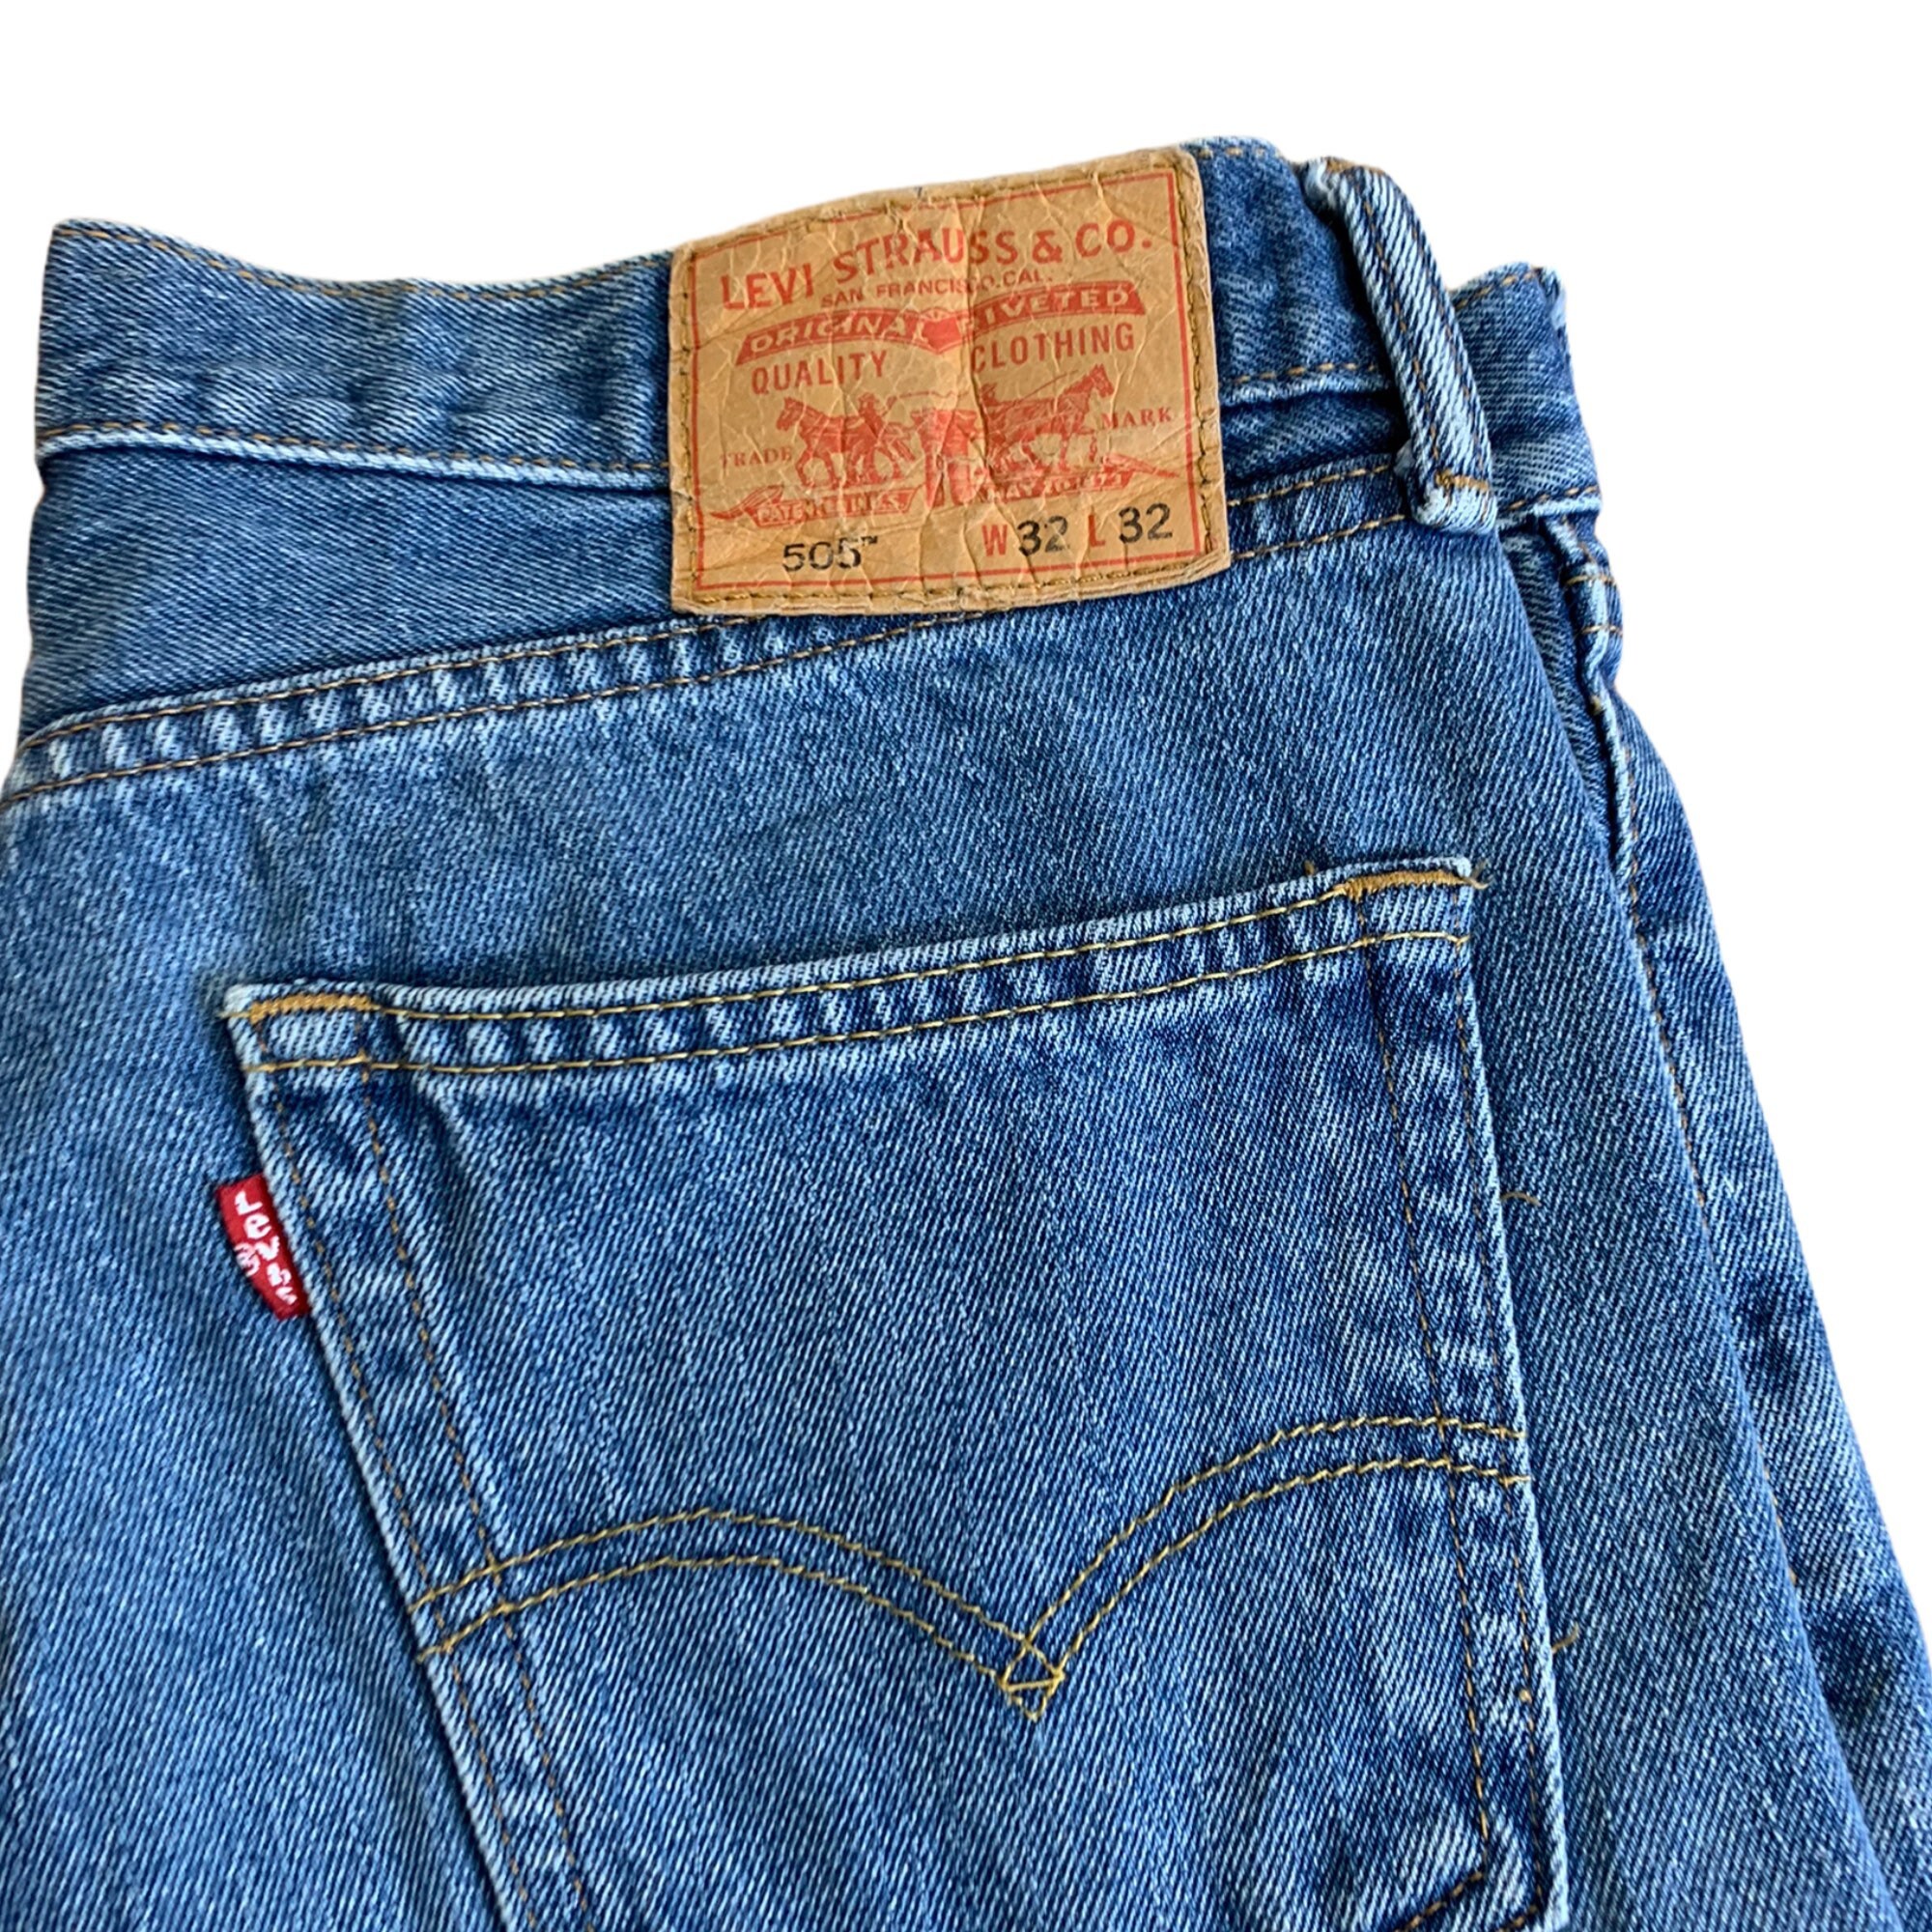 Vintage Made in USA All Cotton Levis Denim Jeans / Vintage | Etsy